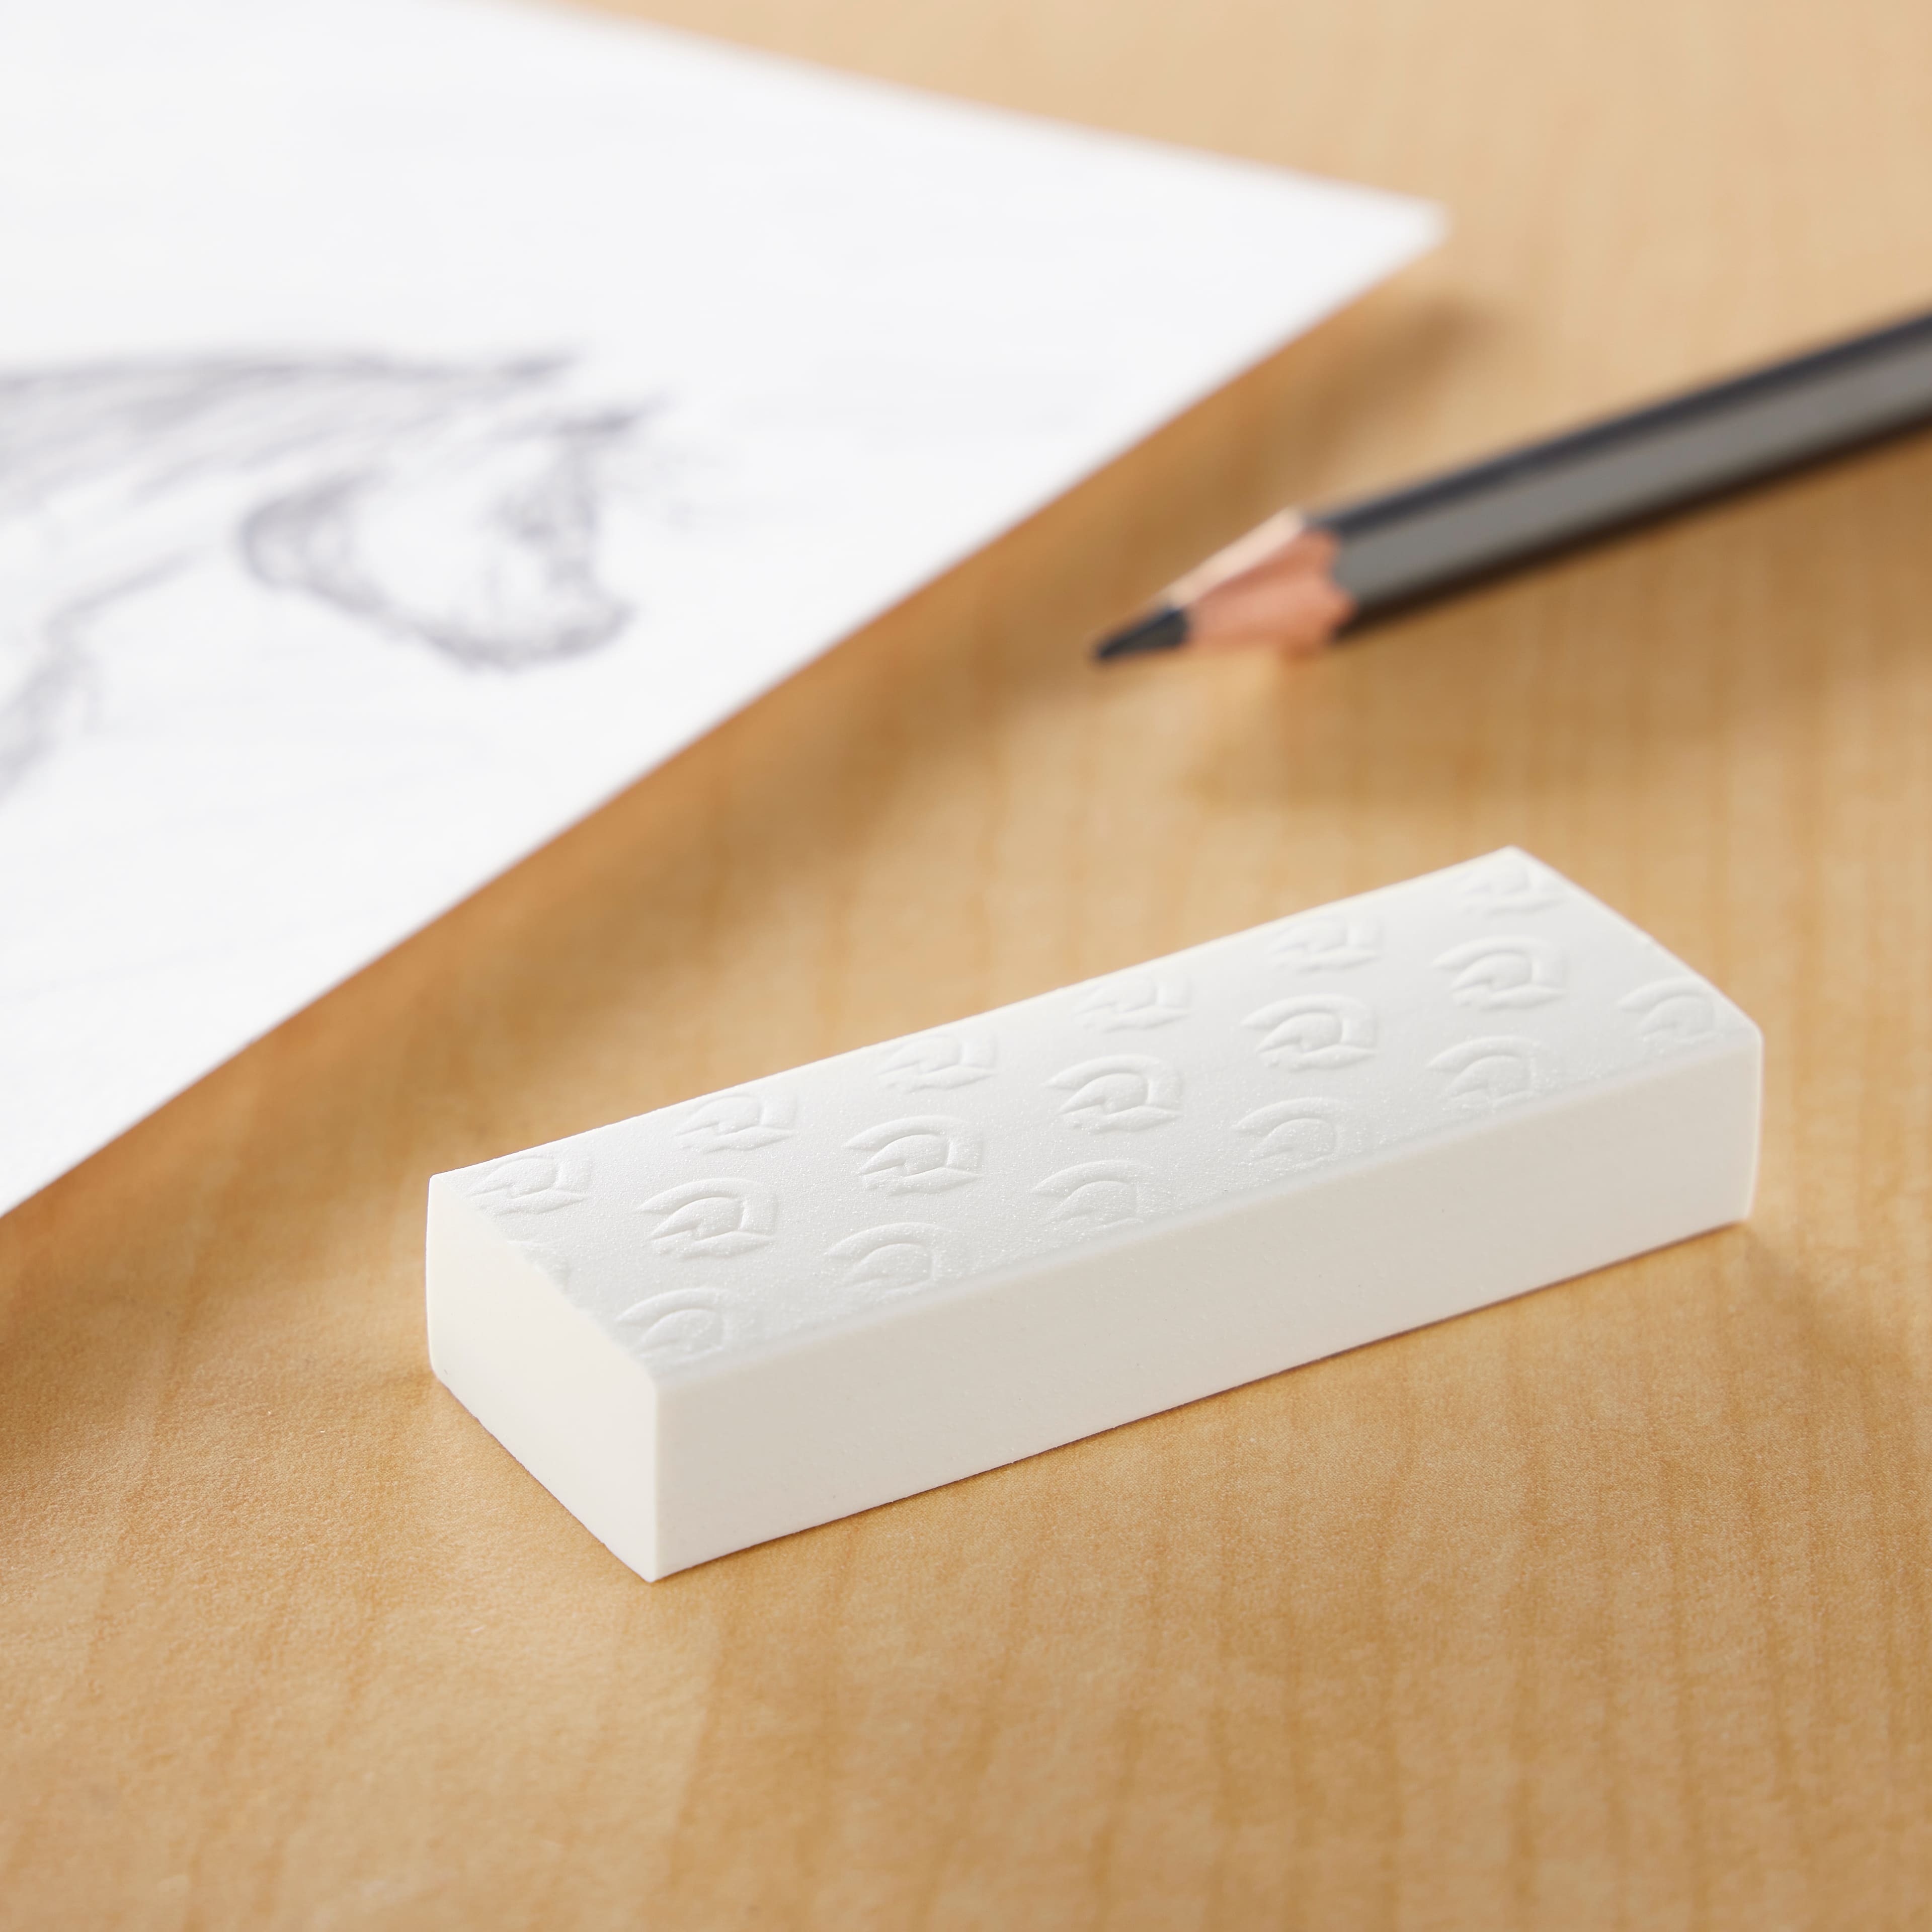 Staedtler Mars Plastic White Eraser (Various Sizes) - Columbia Omni Studio